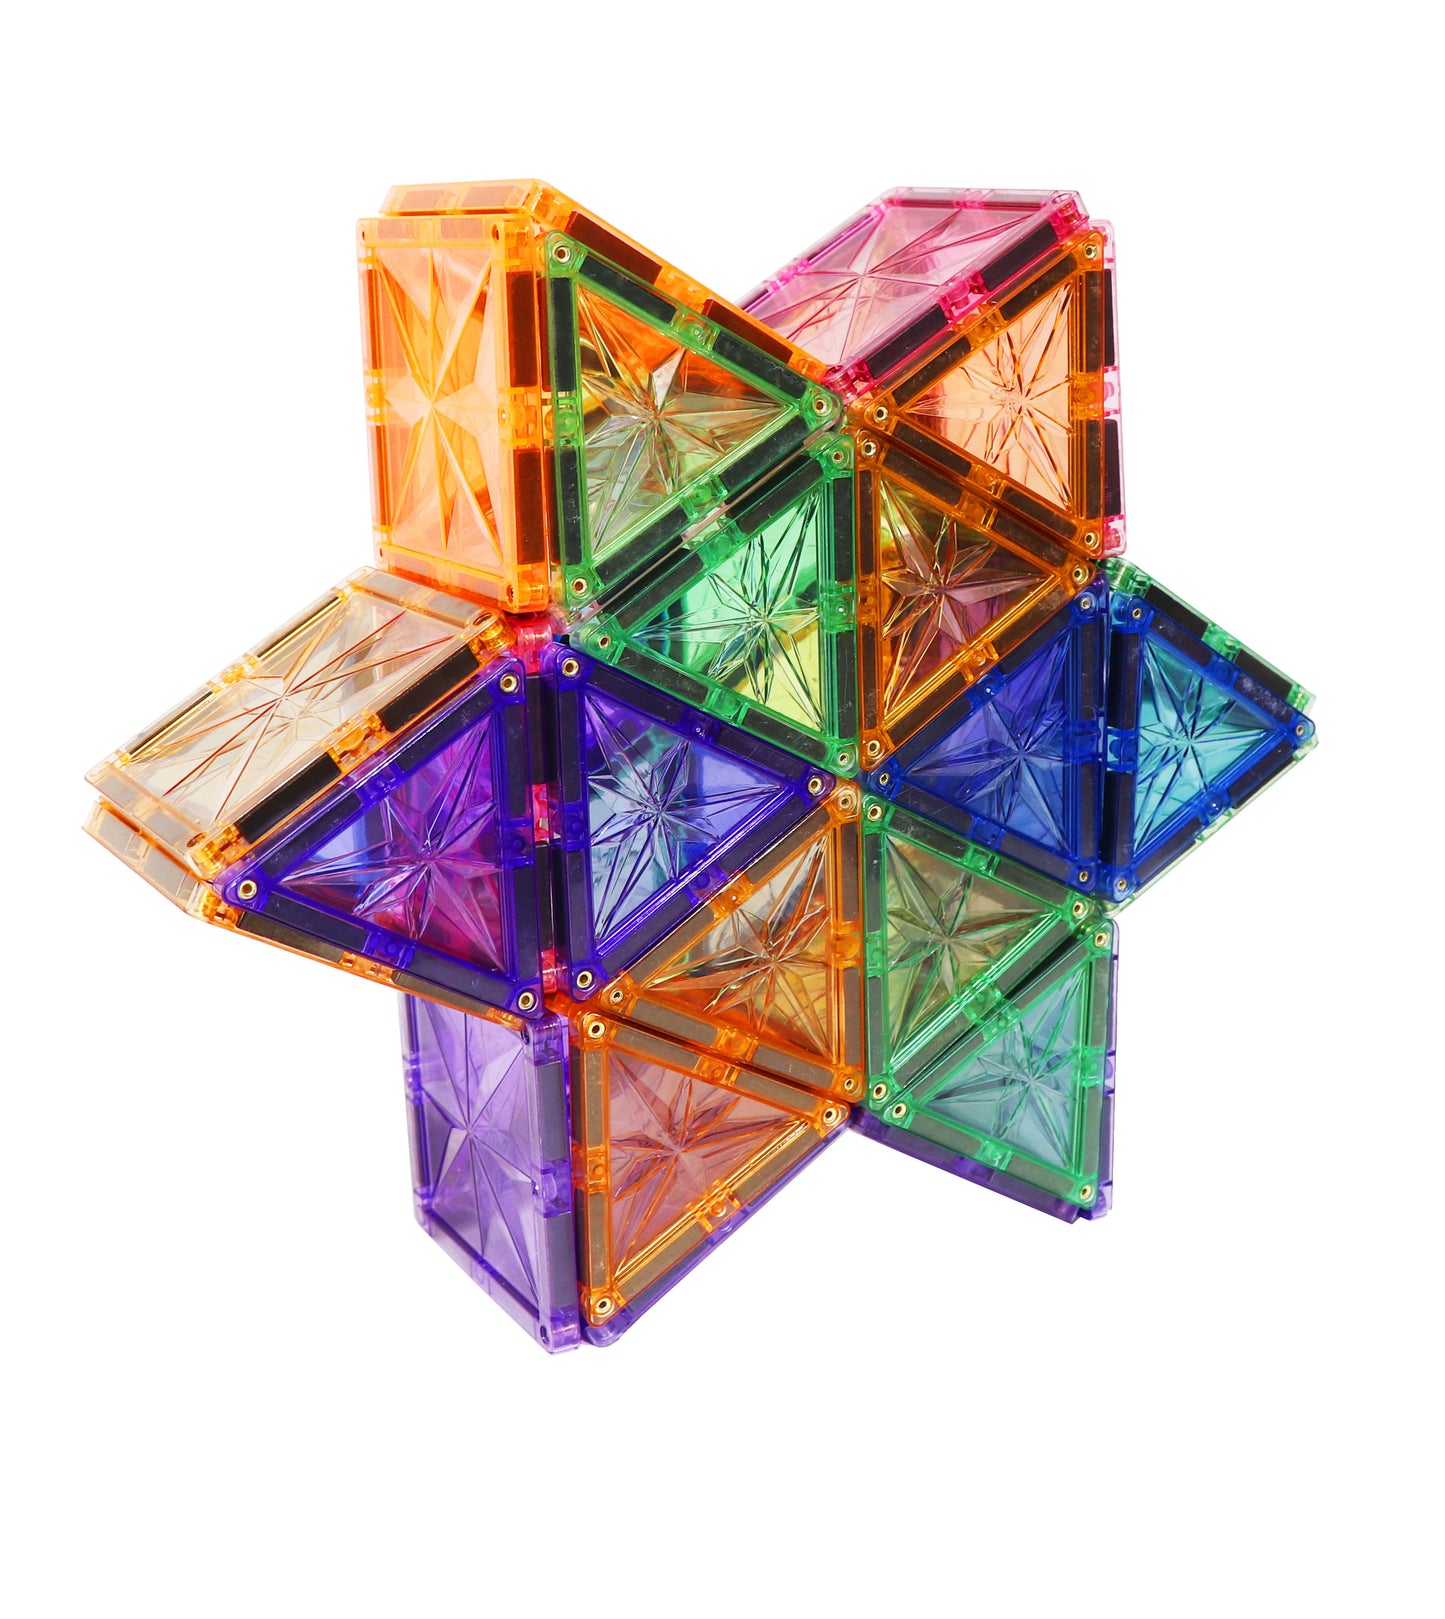 3D Magnetic Building Blocks New Shinny Design 90 Piece Set +Gift!